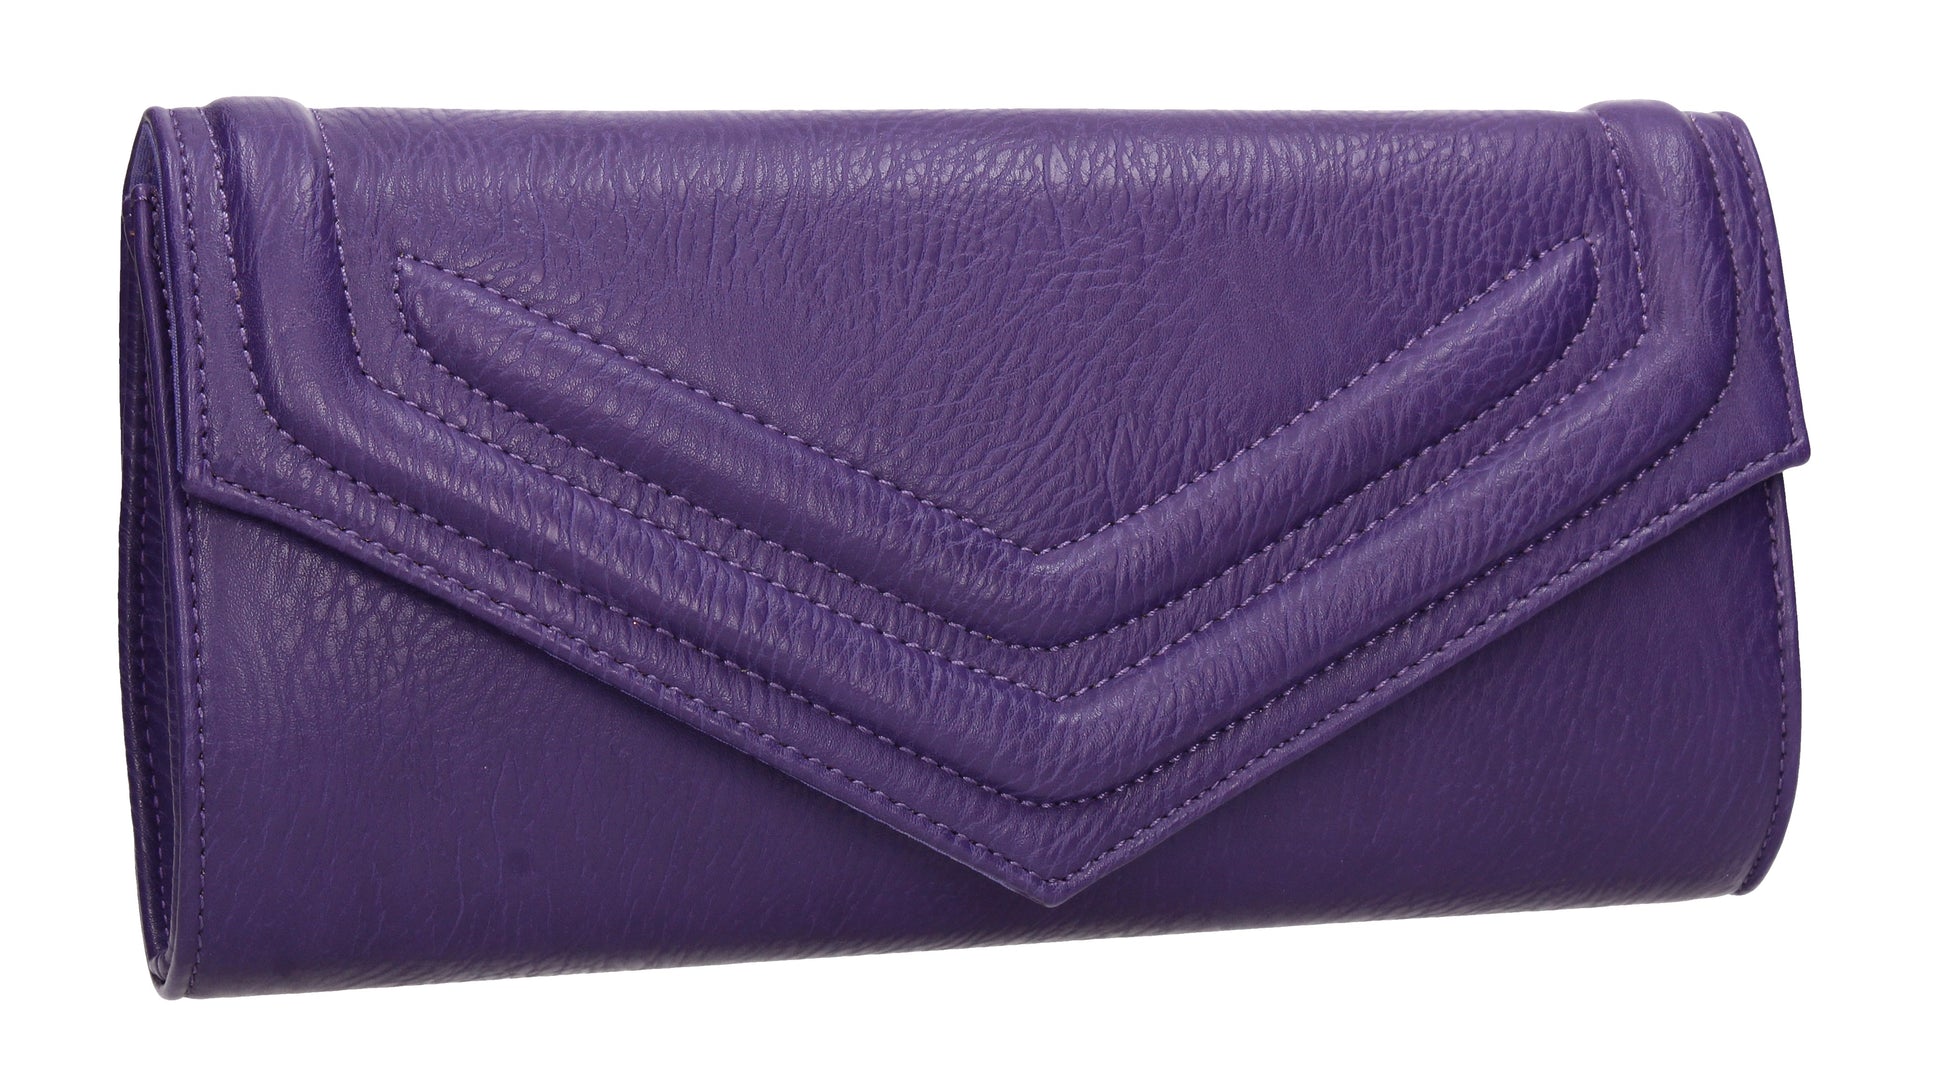 SWANKYSWANS Skye Plain V Clutch Bag Purple Cute Cheap Clutch Bag For Weddings School and Work